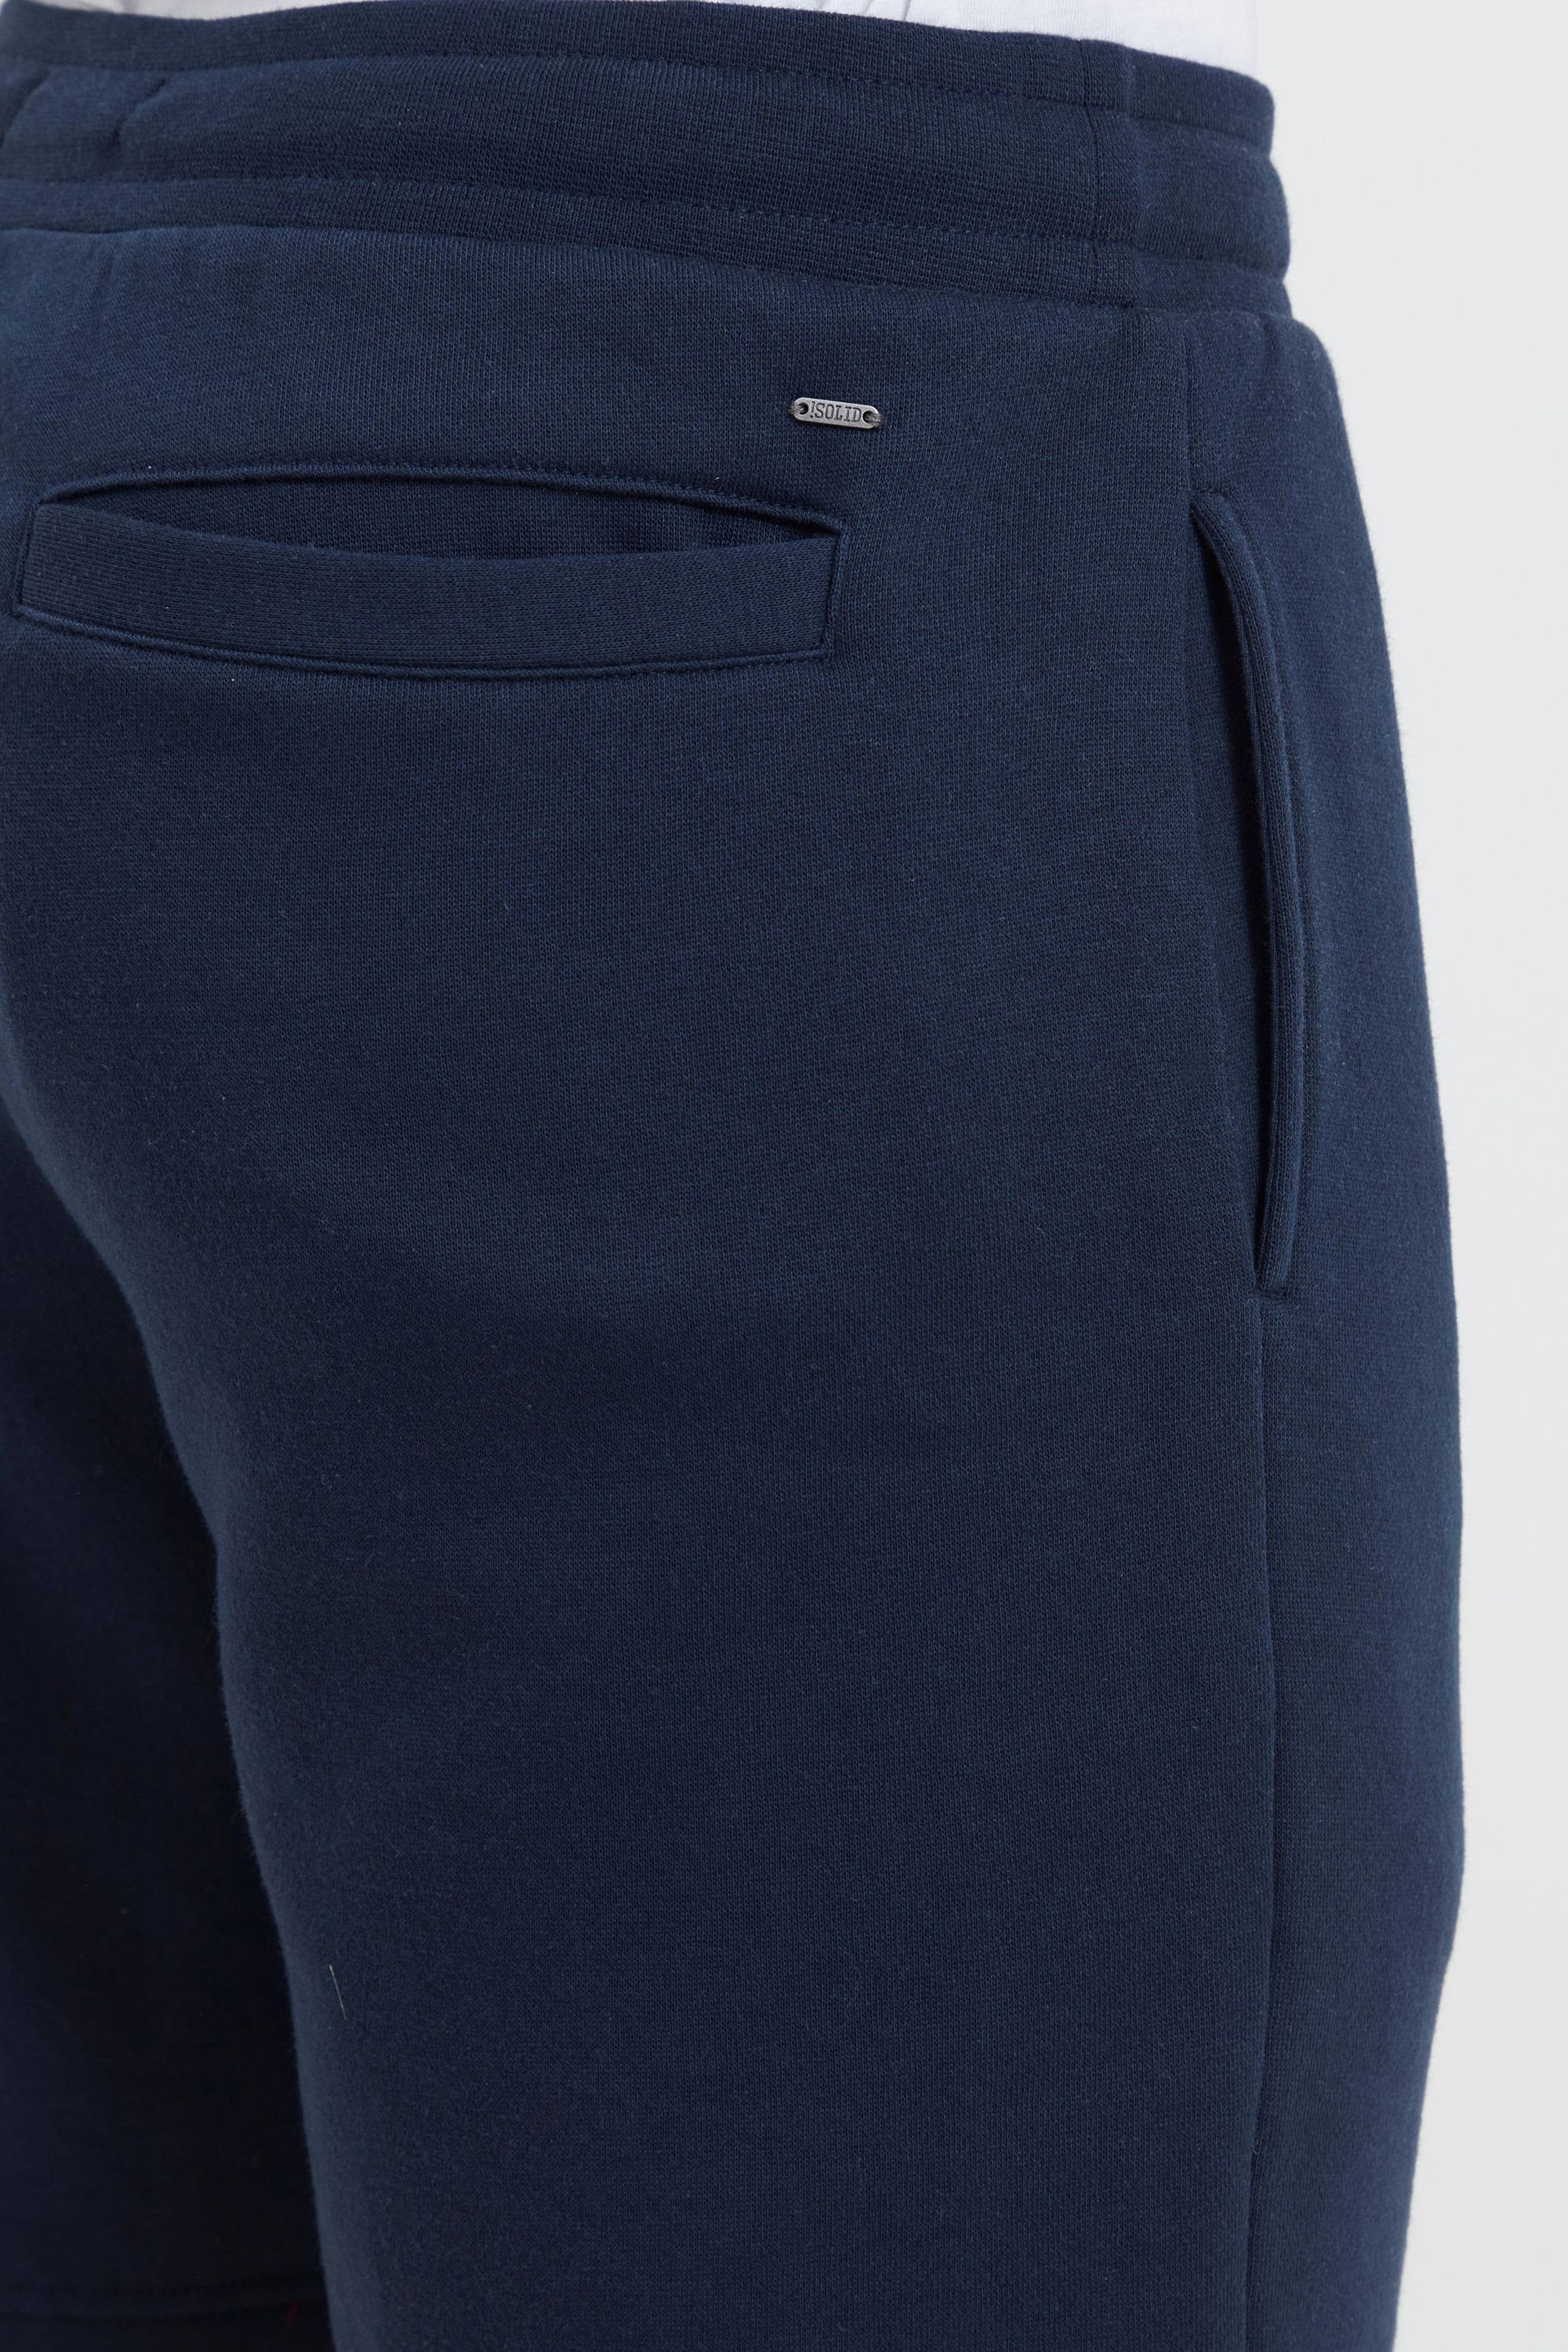 Sweatshorts Basic Blue !Solid Insignia mit SDOliver Kordeln (194010) Shorts Sweat